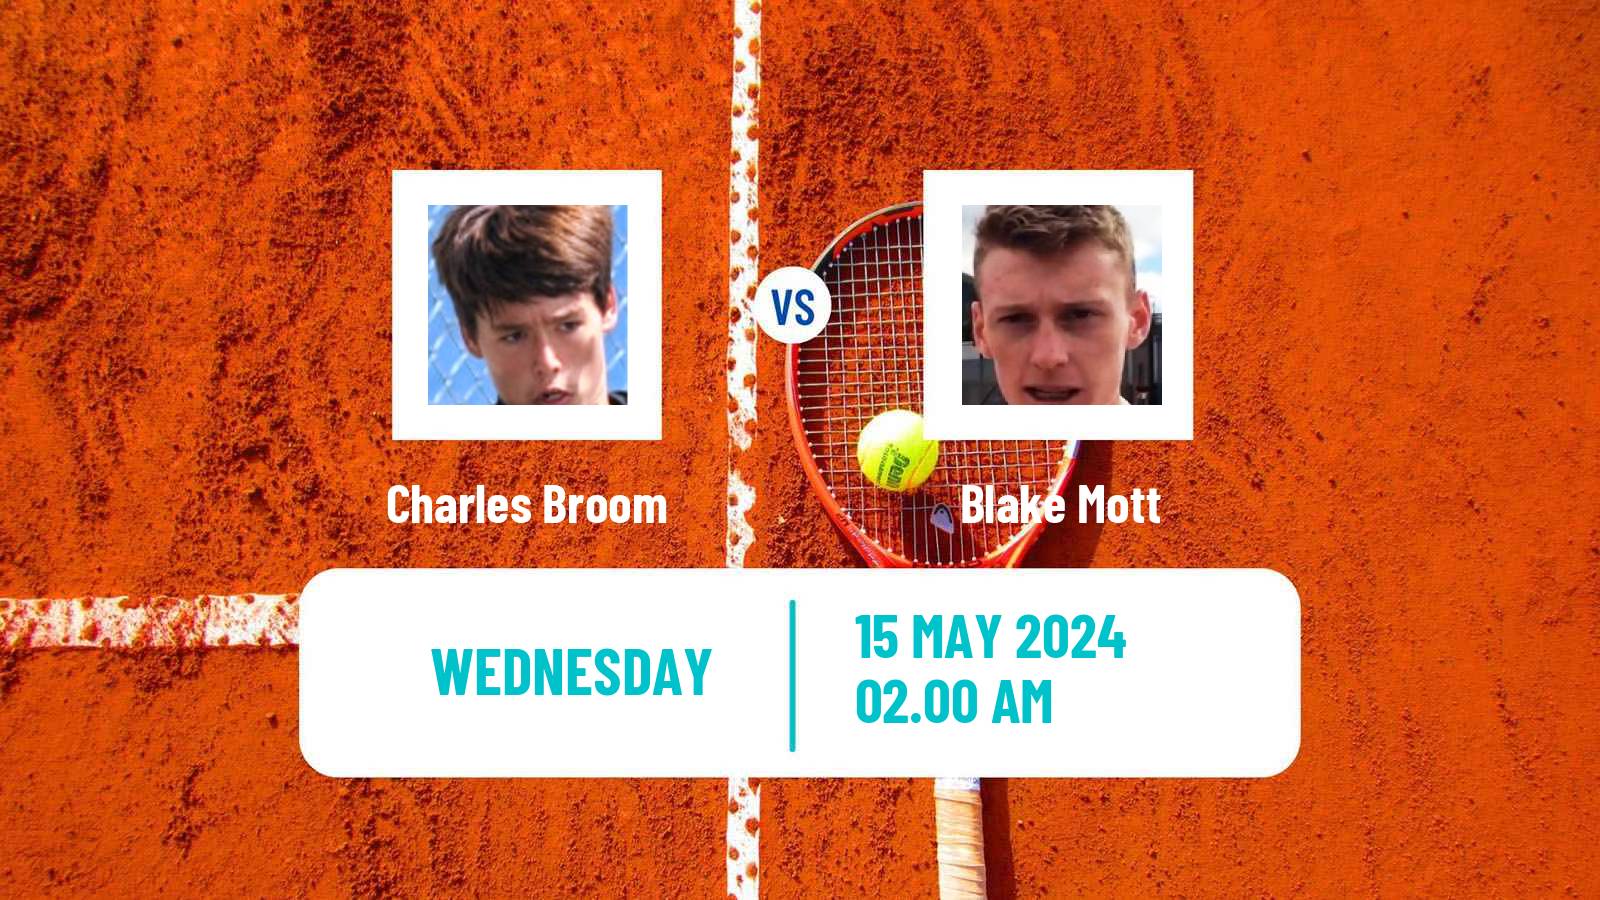 Tennis ITF M25 Kachreti Men Charles Broom - Blake Mott